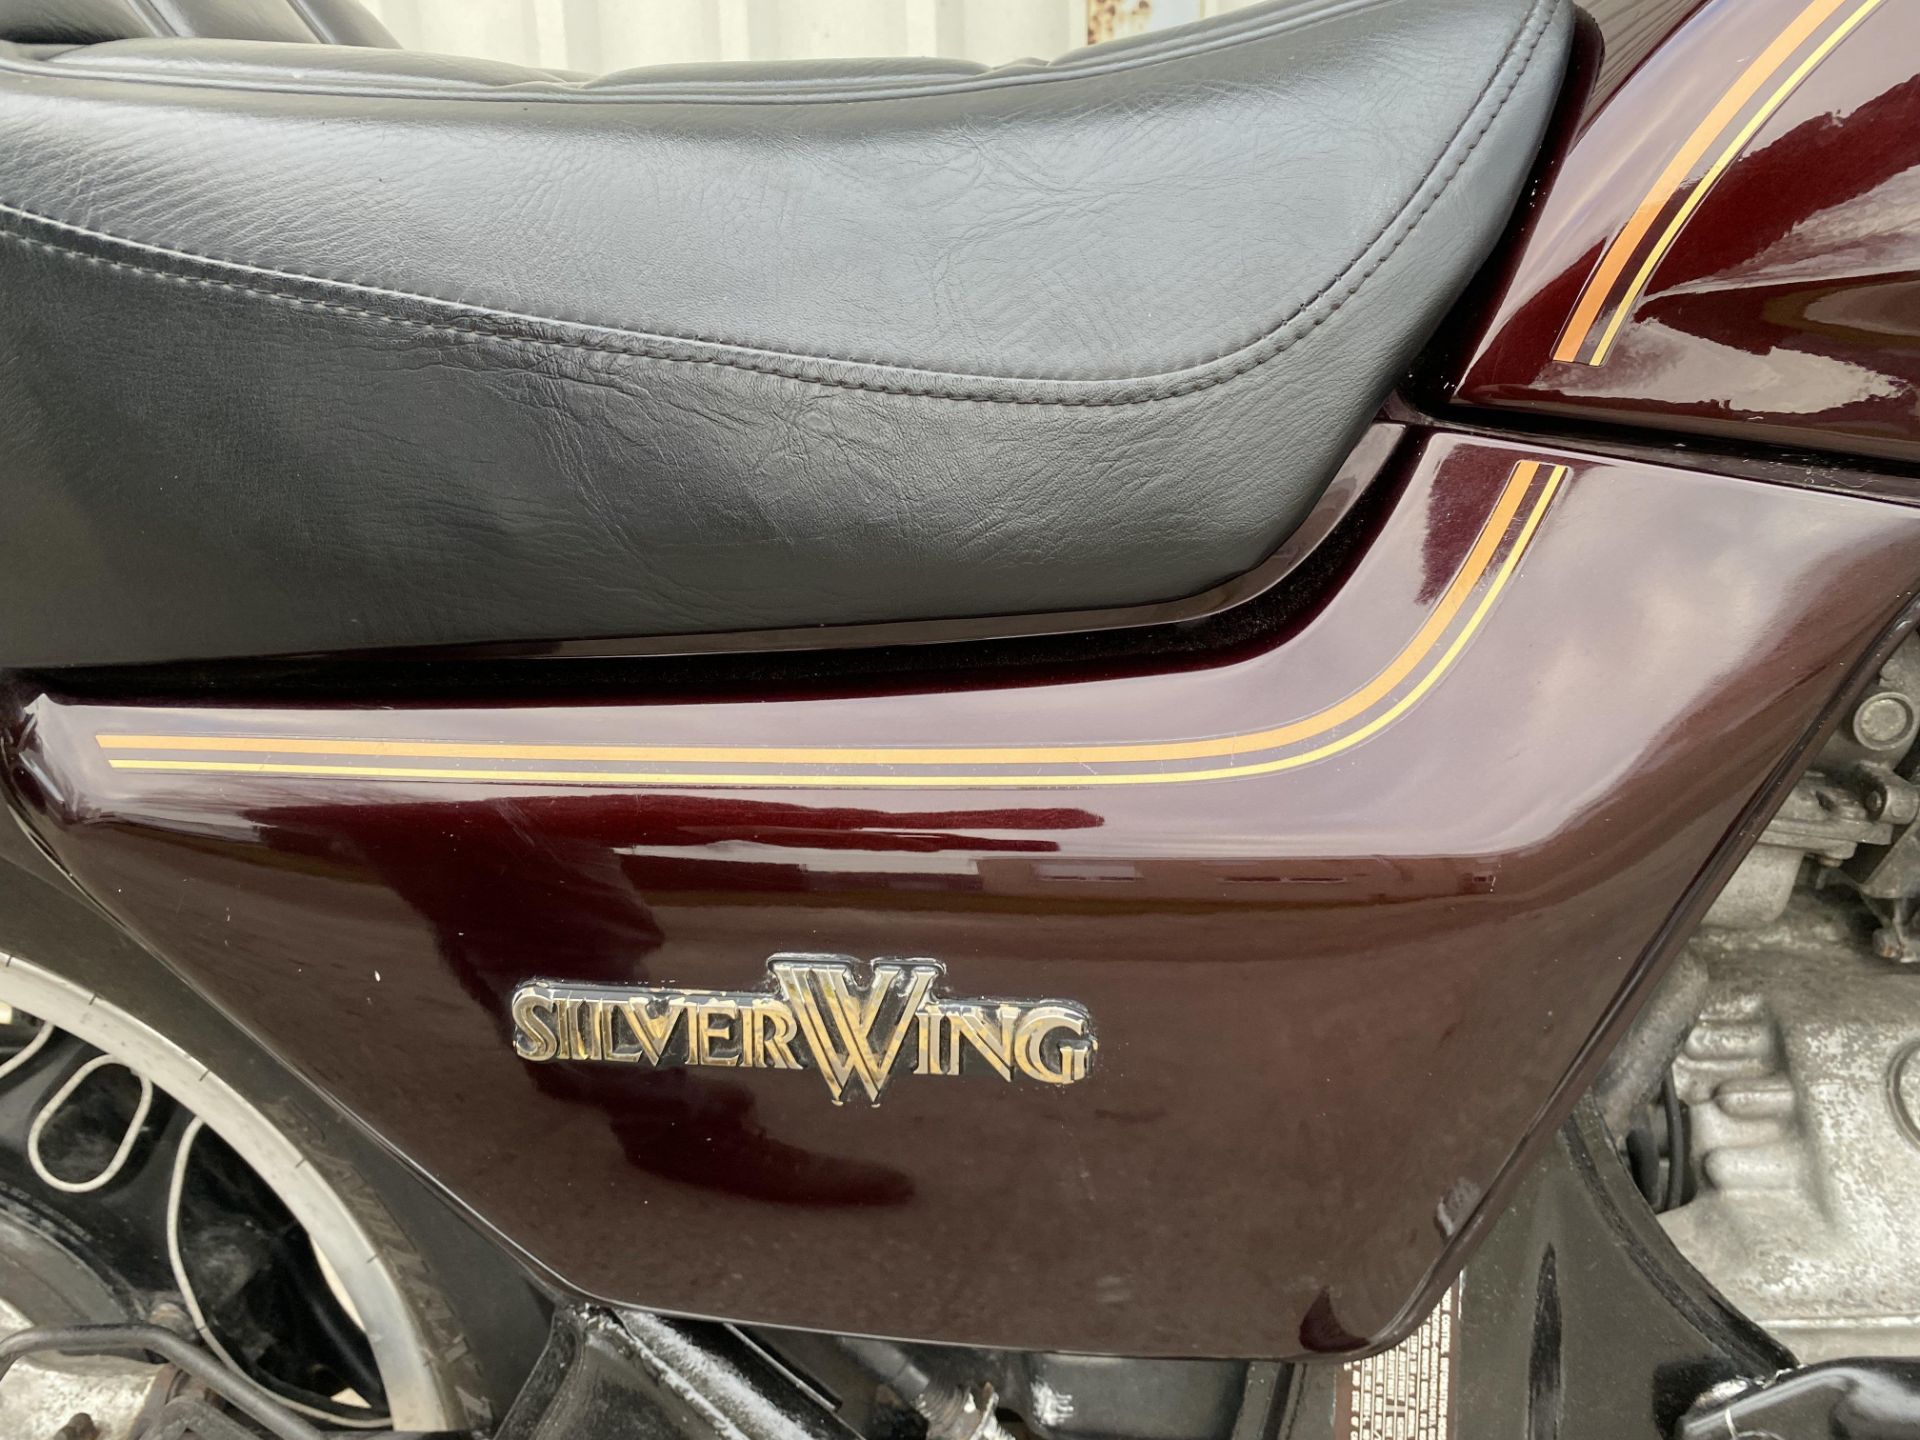 Honda Silverwing - Image 30 of 31